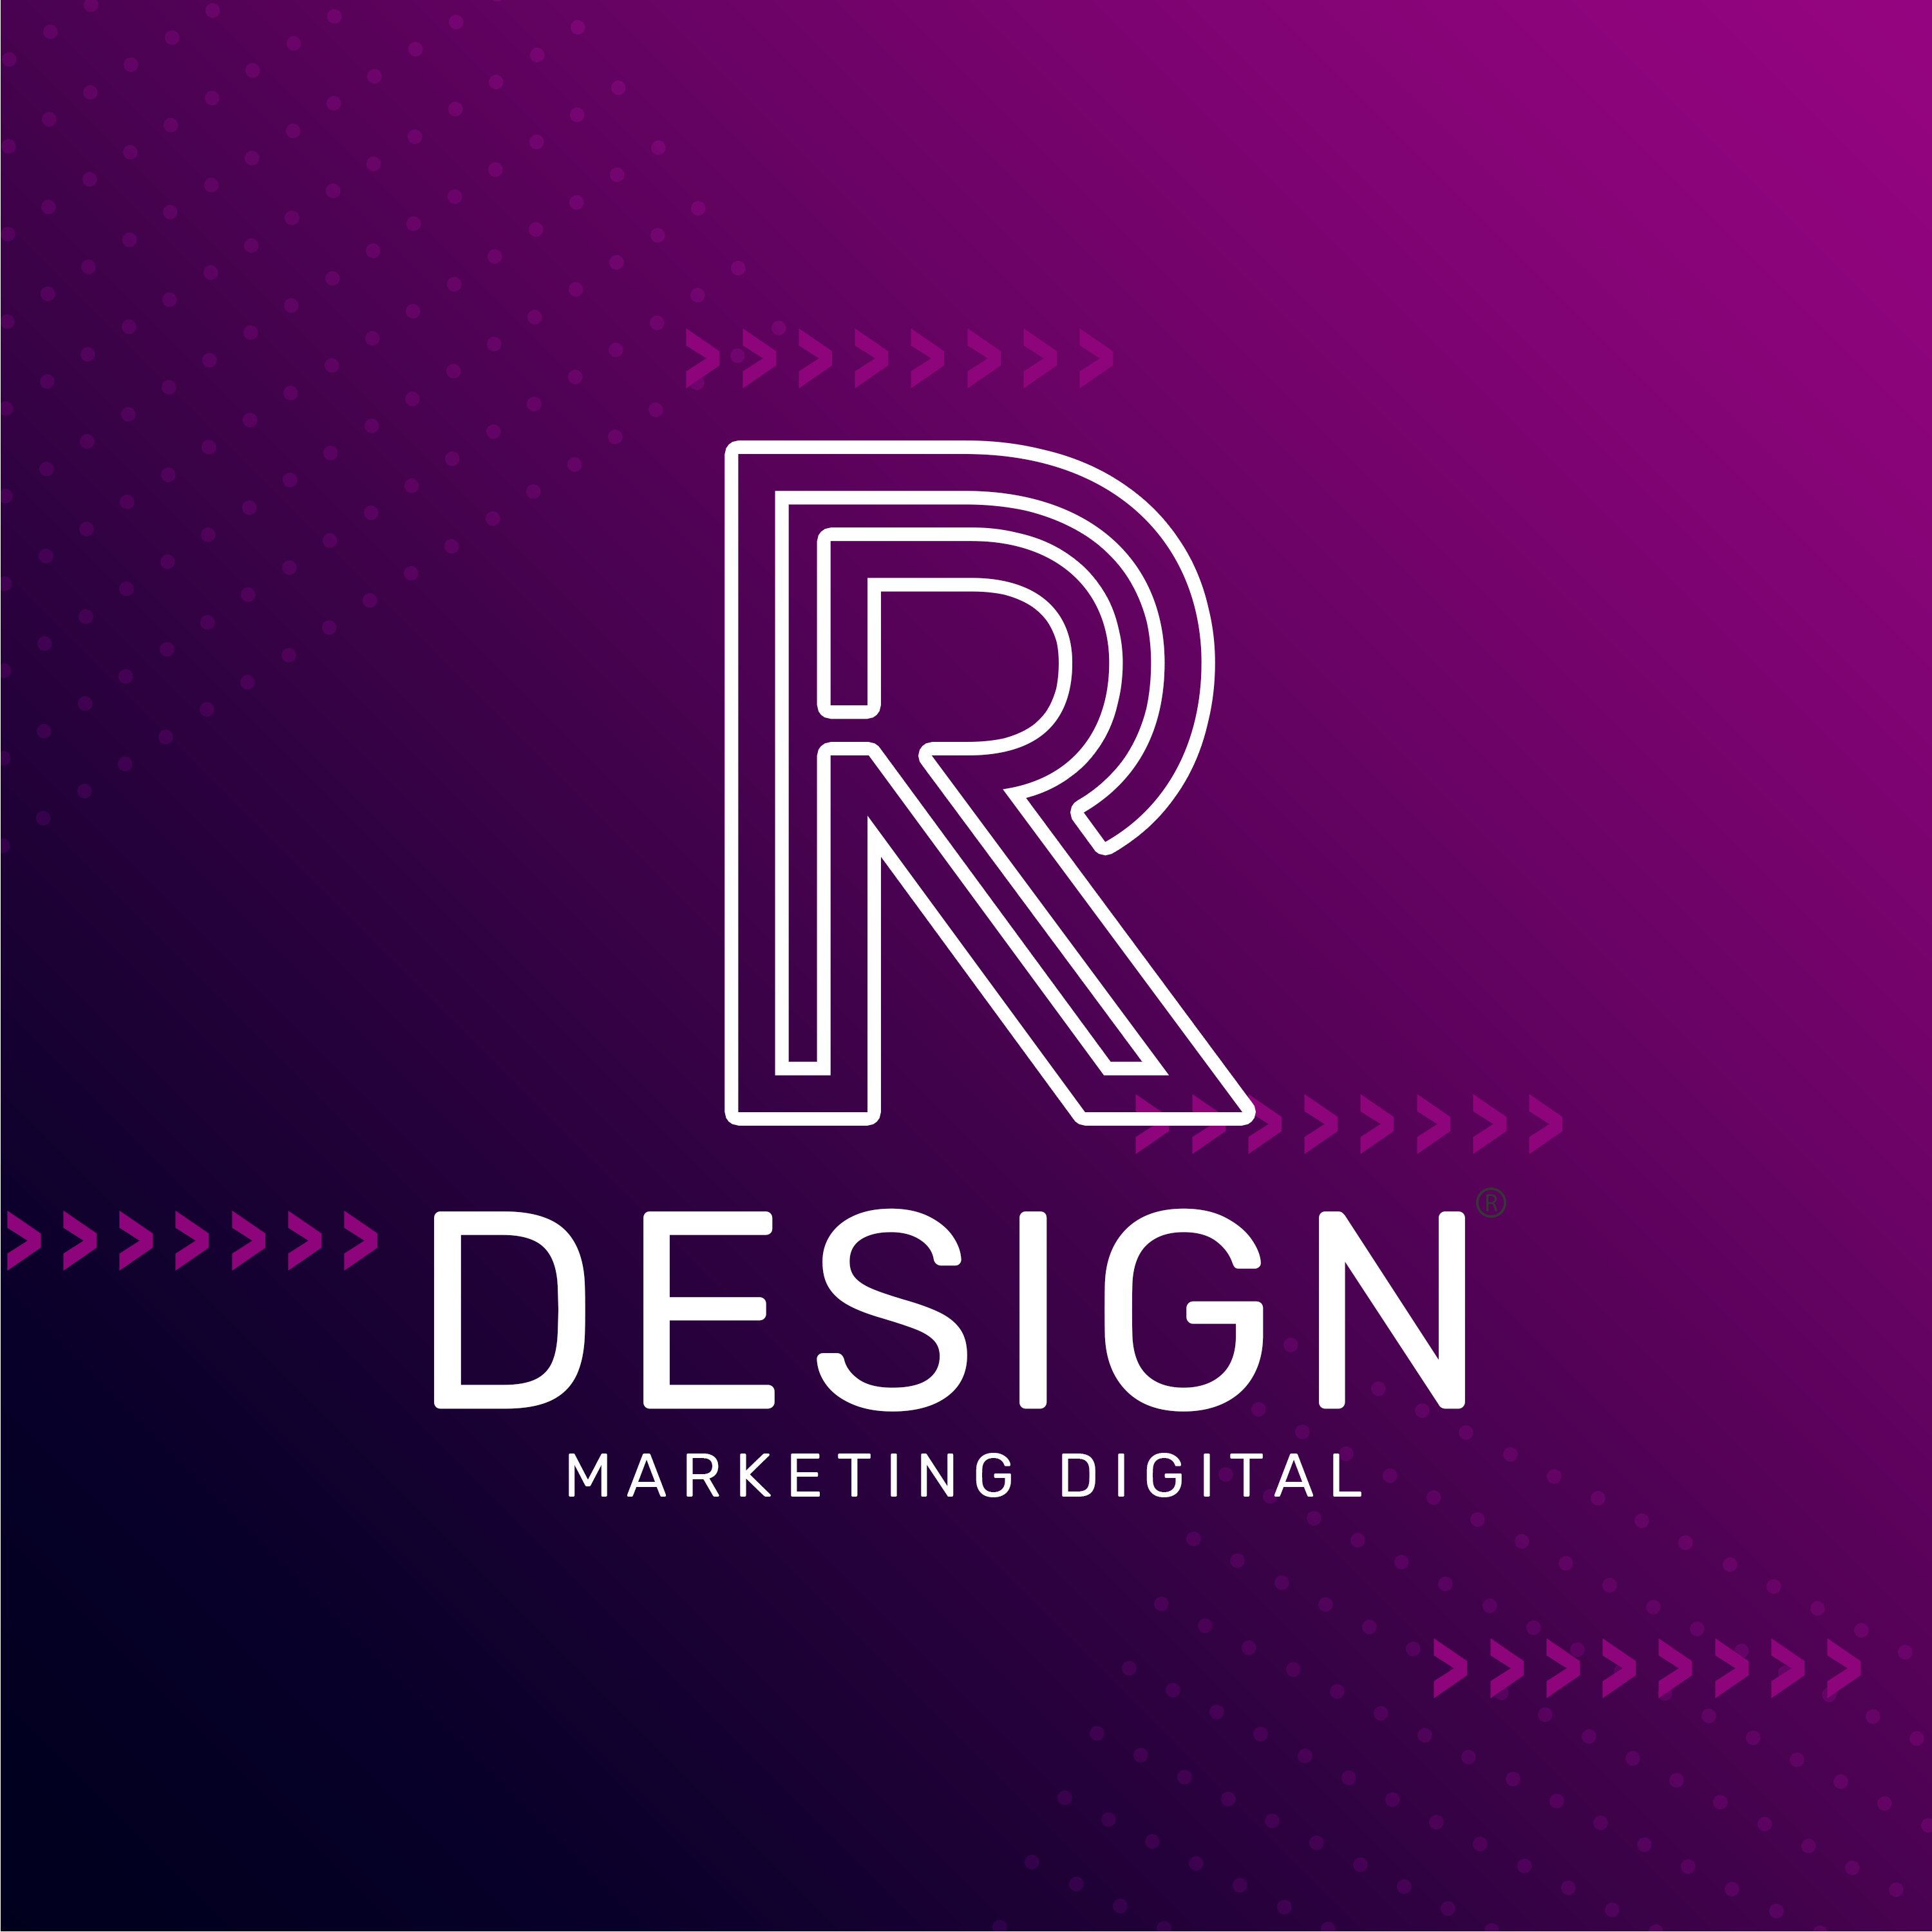 Rdesign Marketing Digital